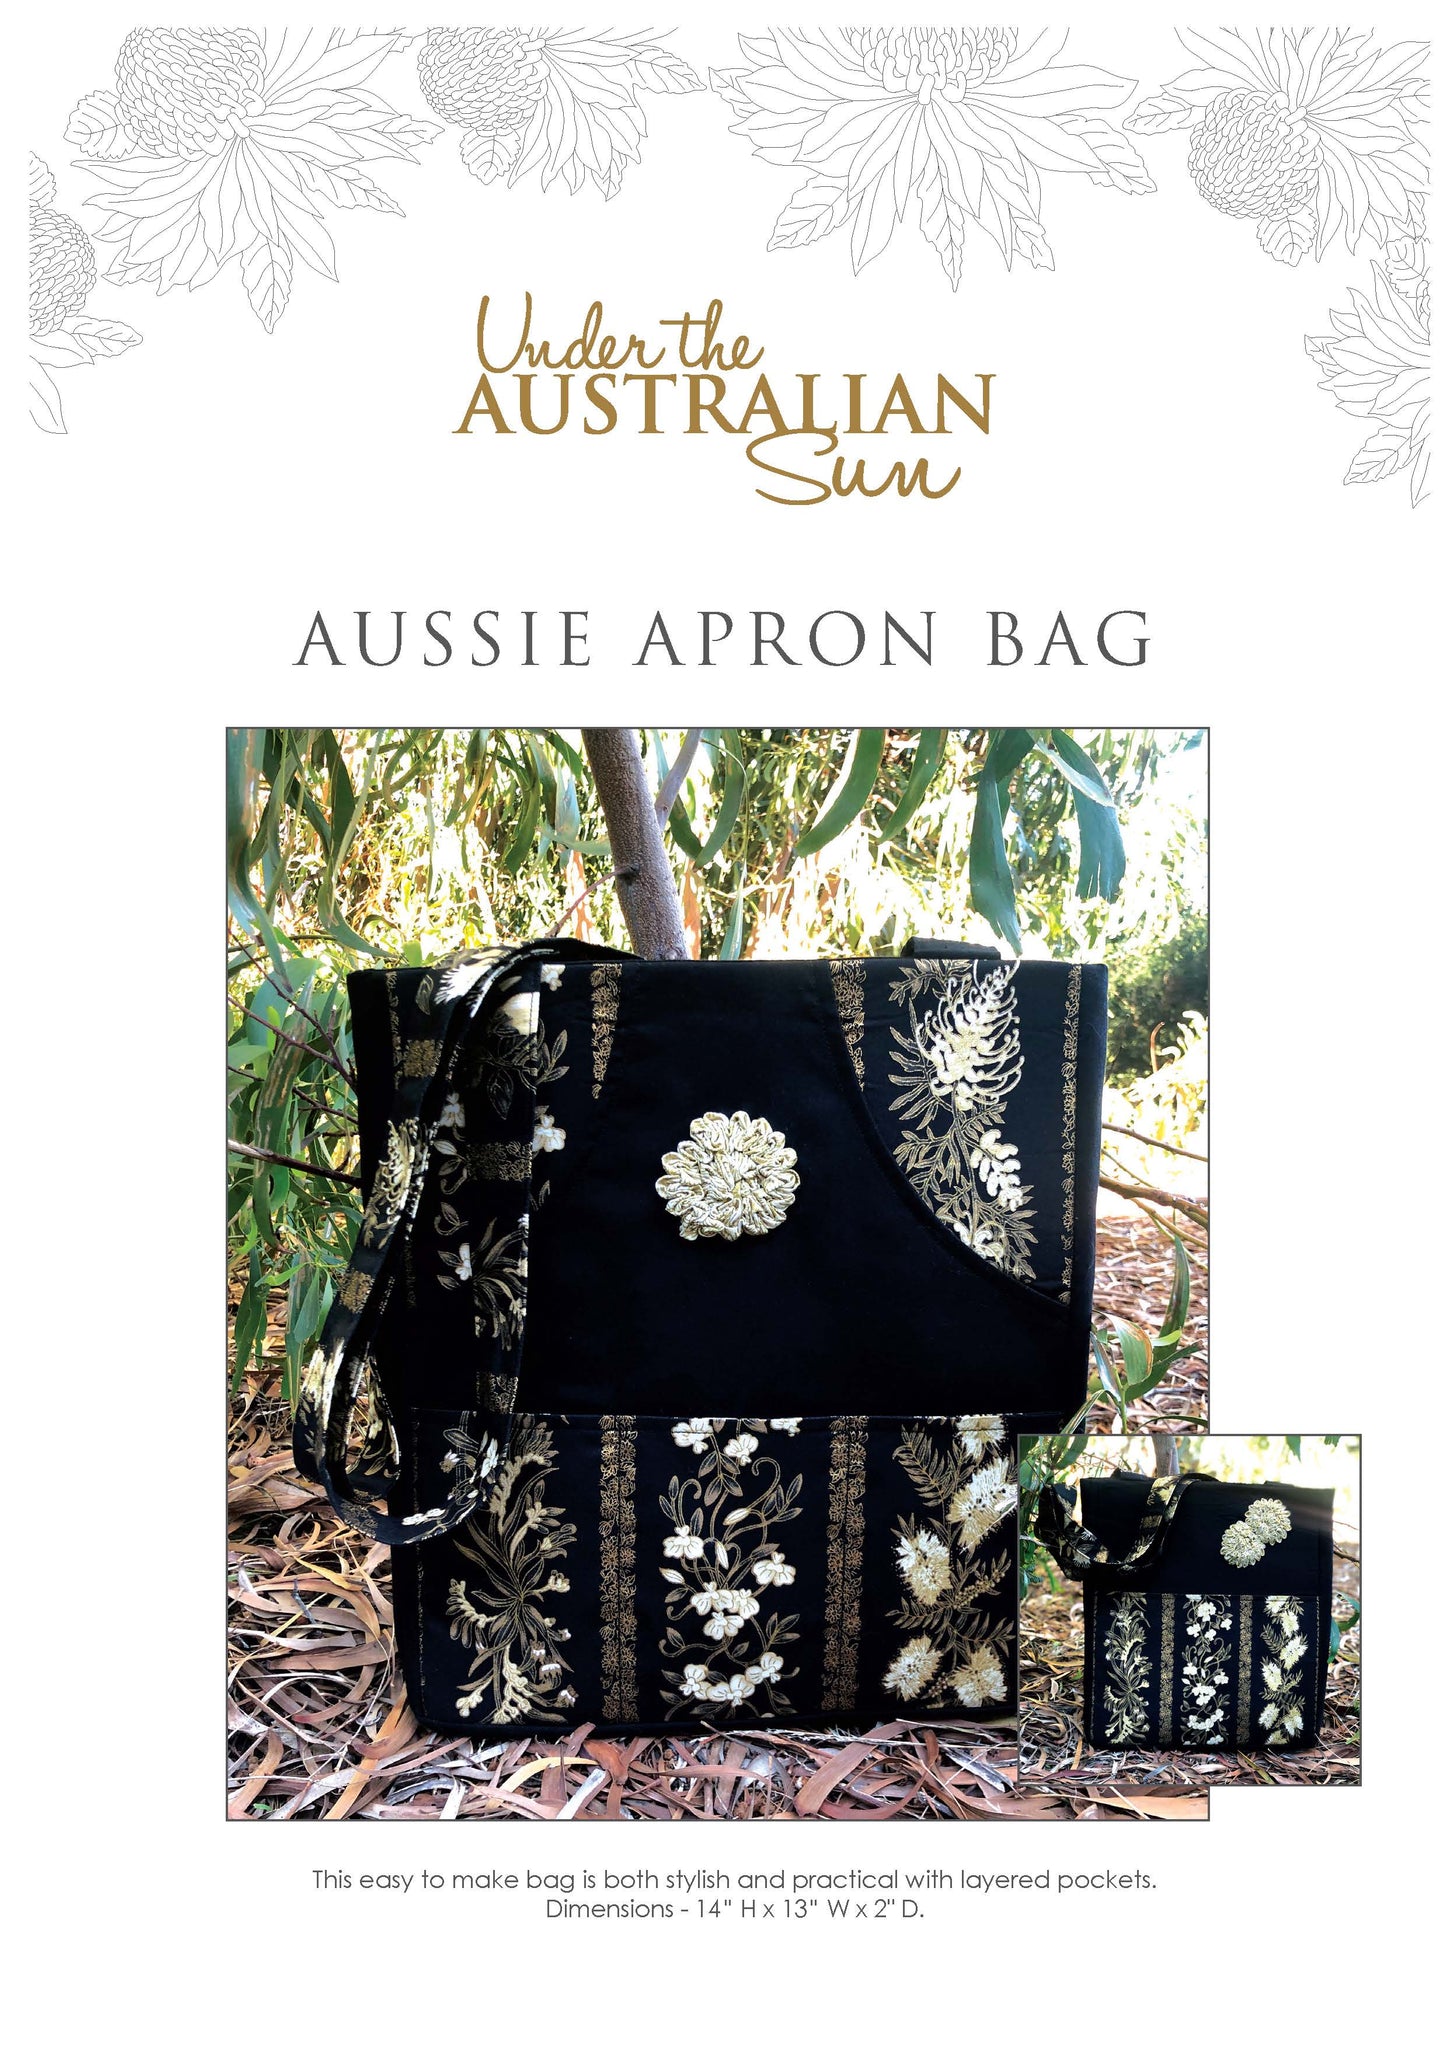 Aussie Apron Bag